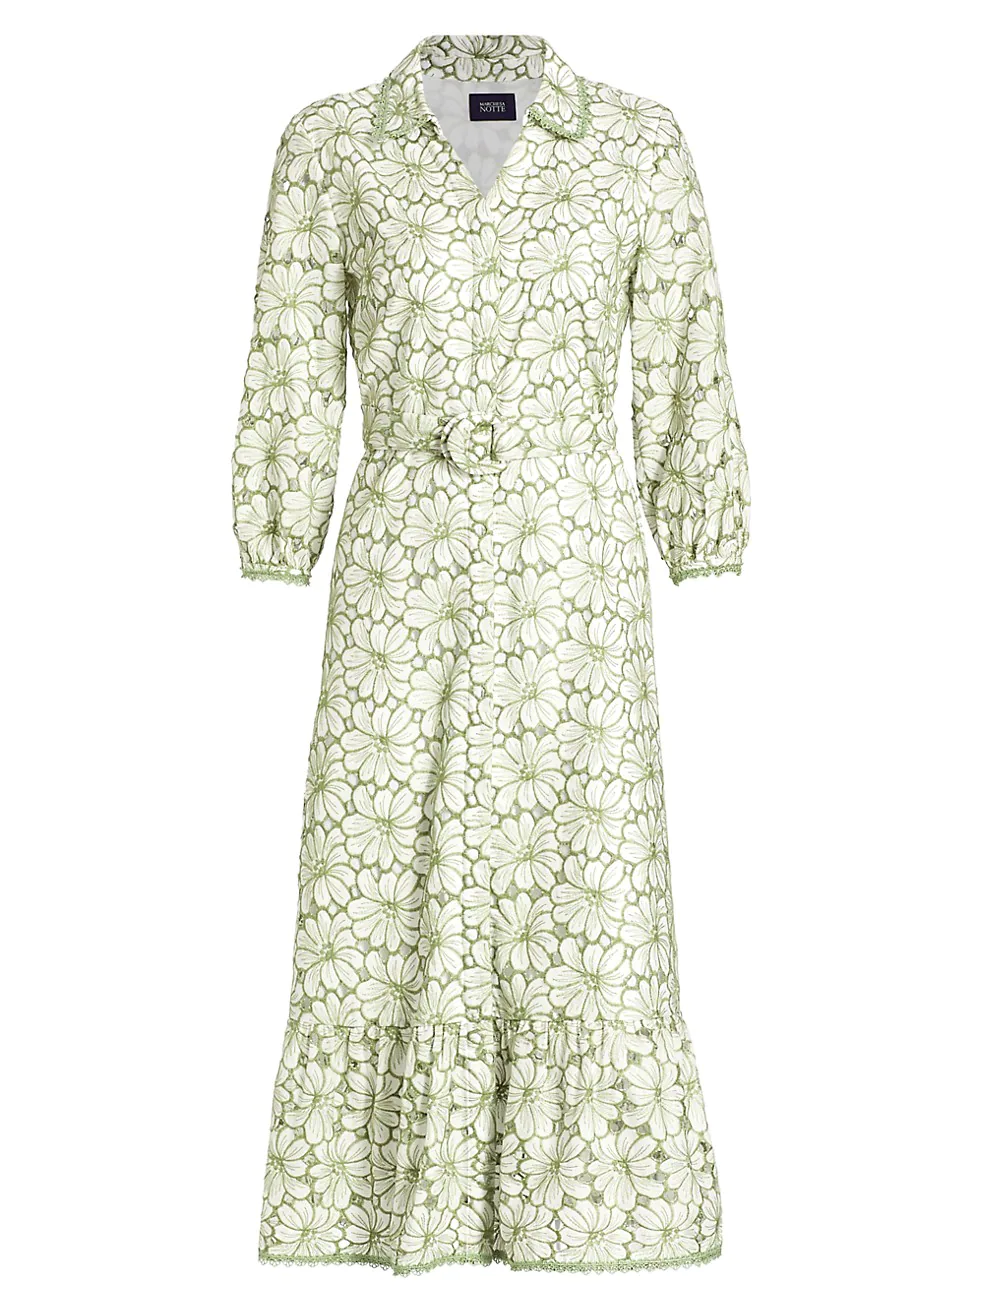 green and white maxi dress - Saks fifth Avenue - fashion